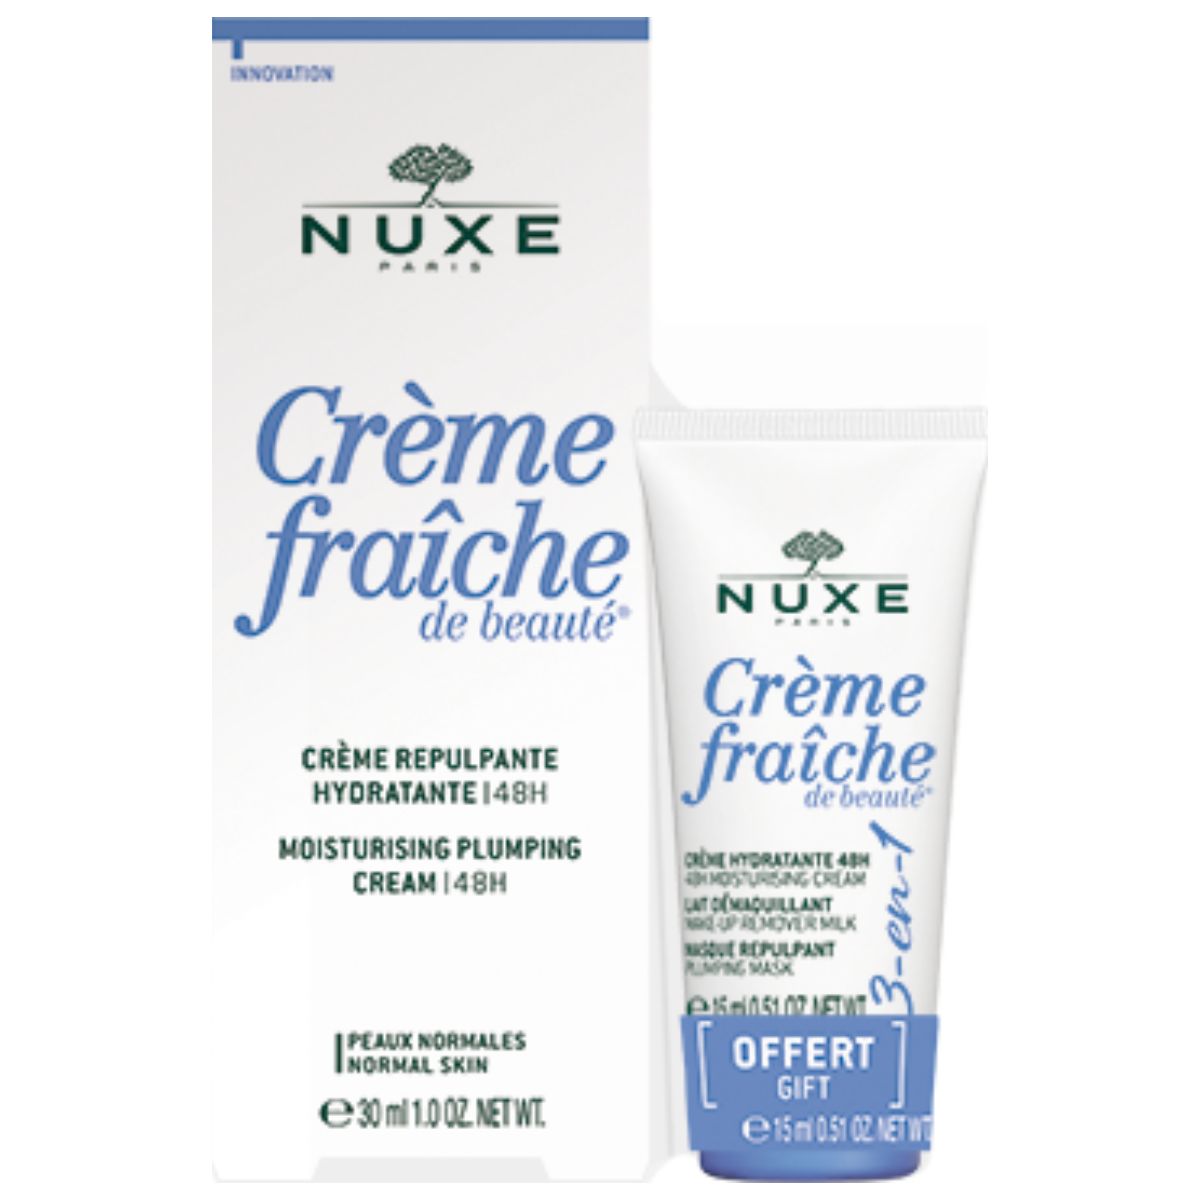 NUXE Crème Fraiche Moisturising Plumping Cream 48Hours FREE 3in1 15ml.